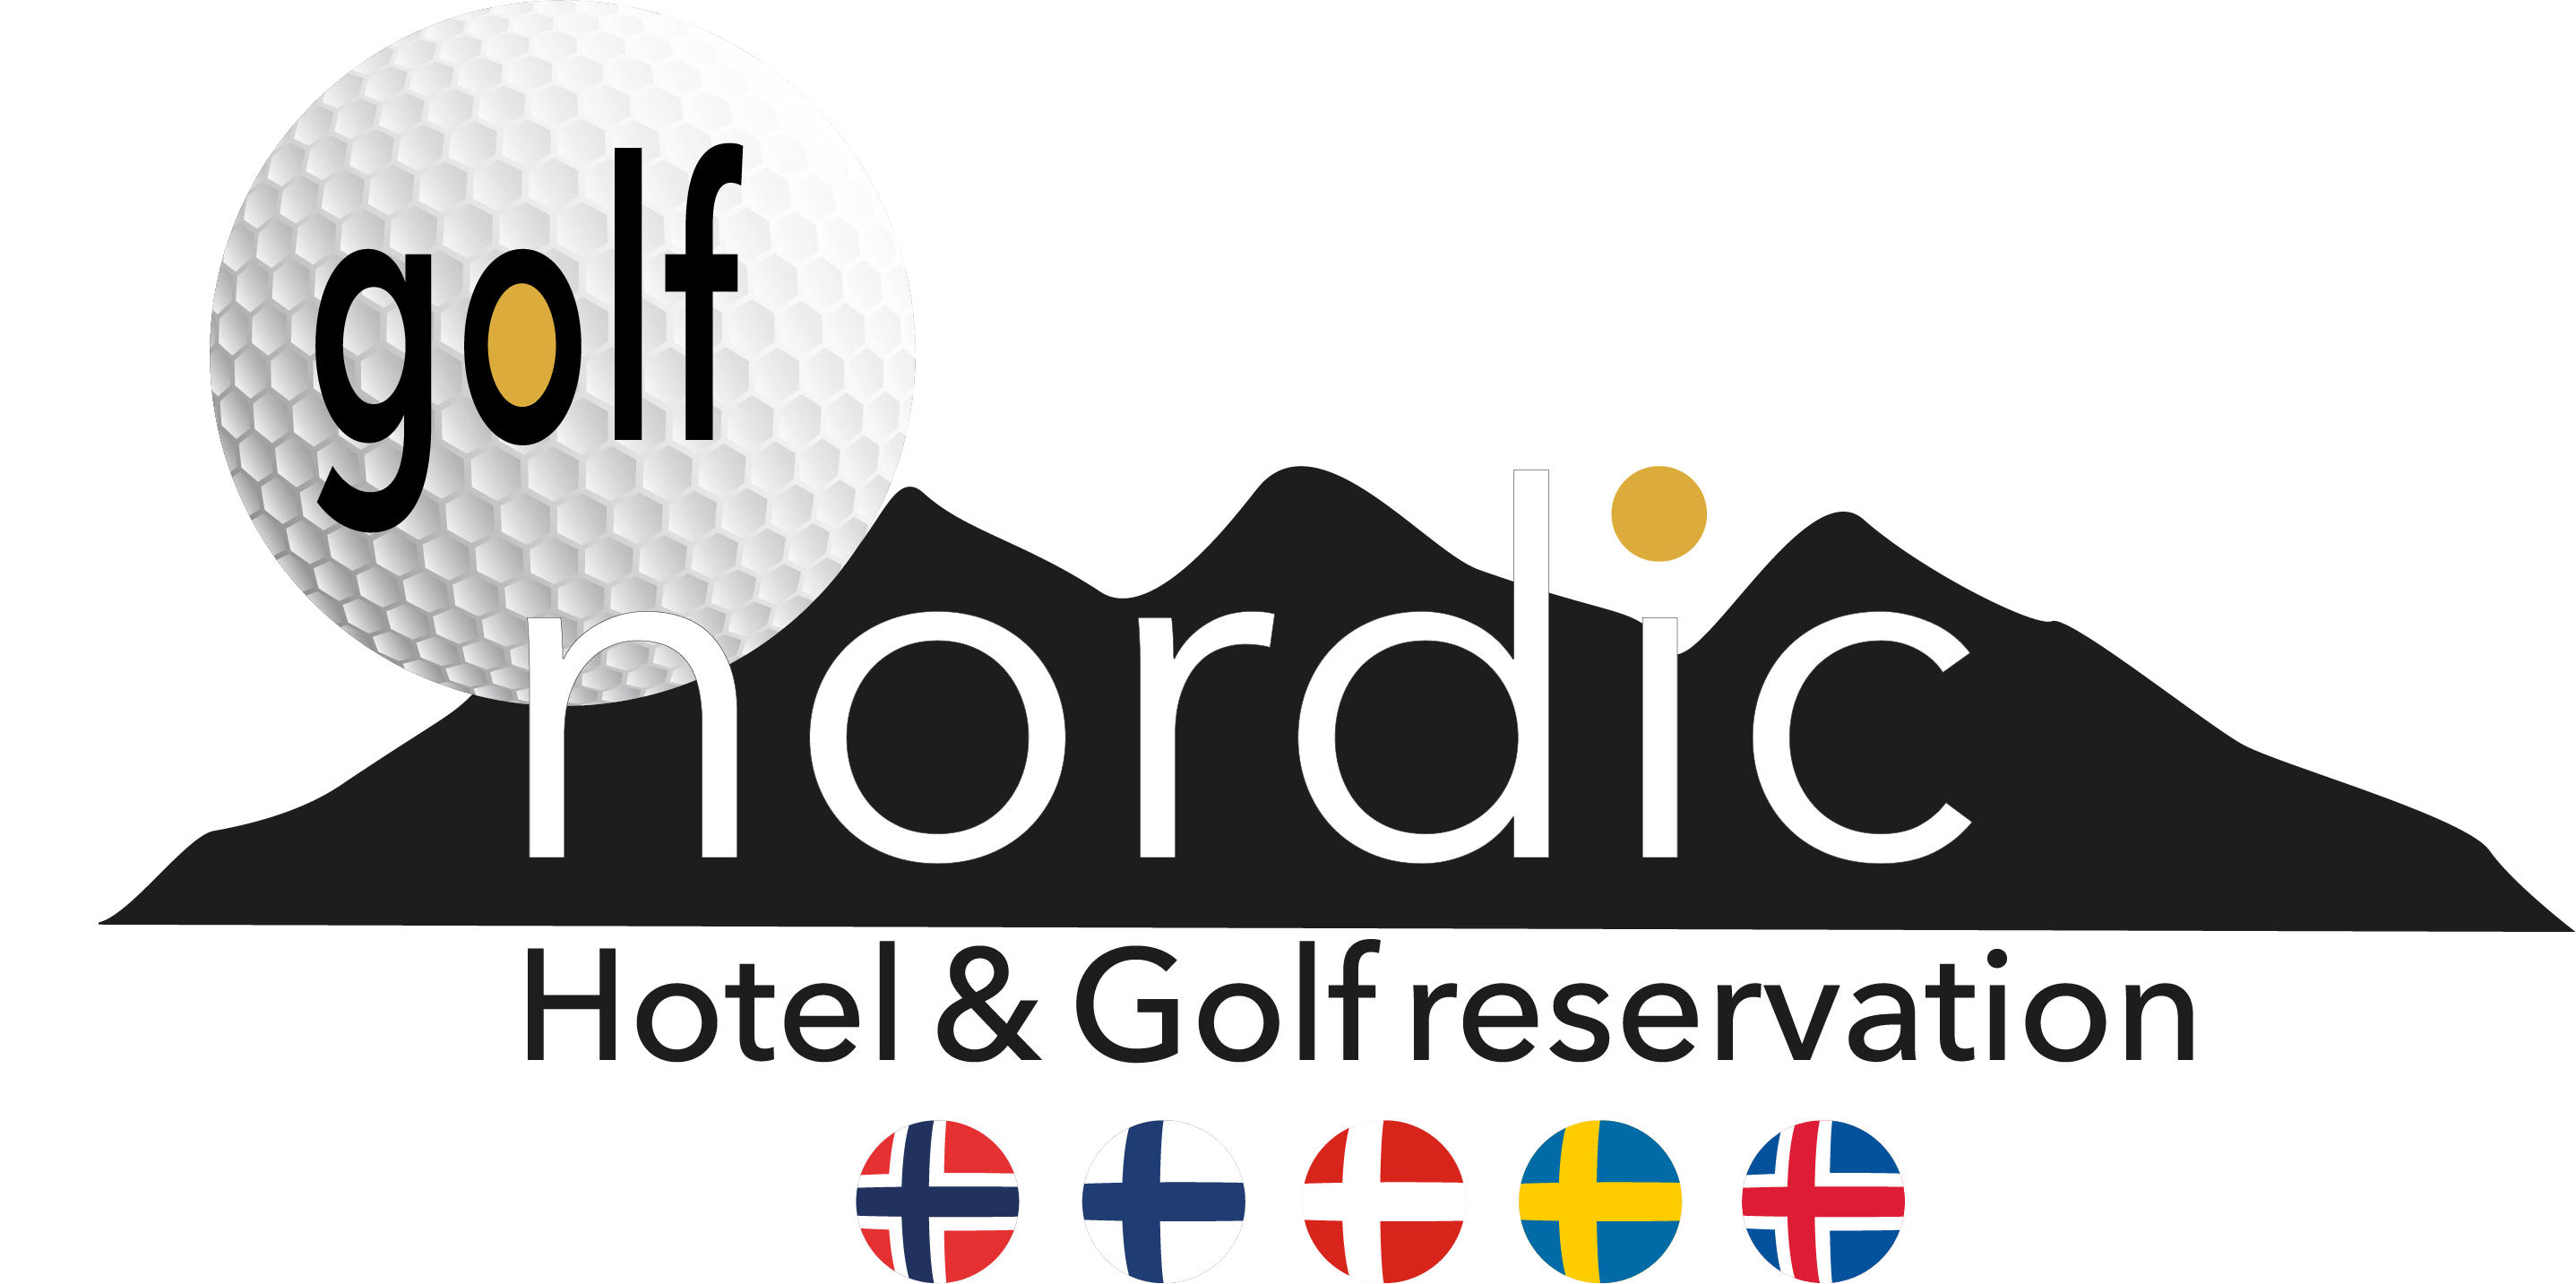 Golf Nordic